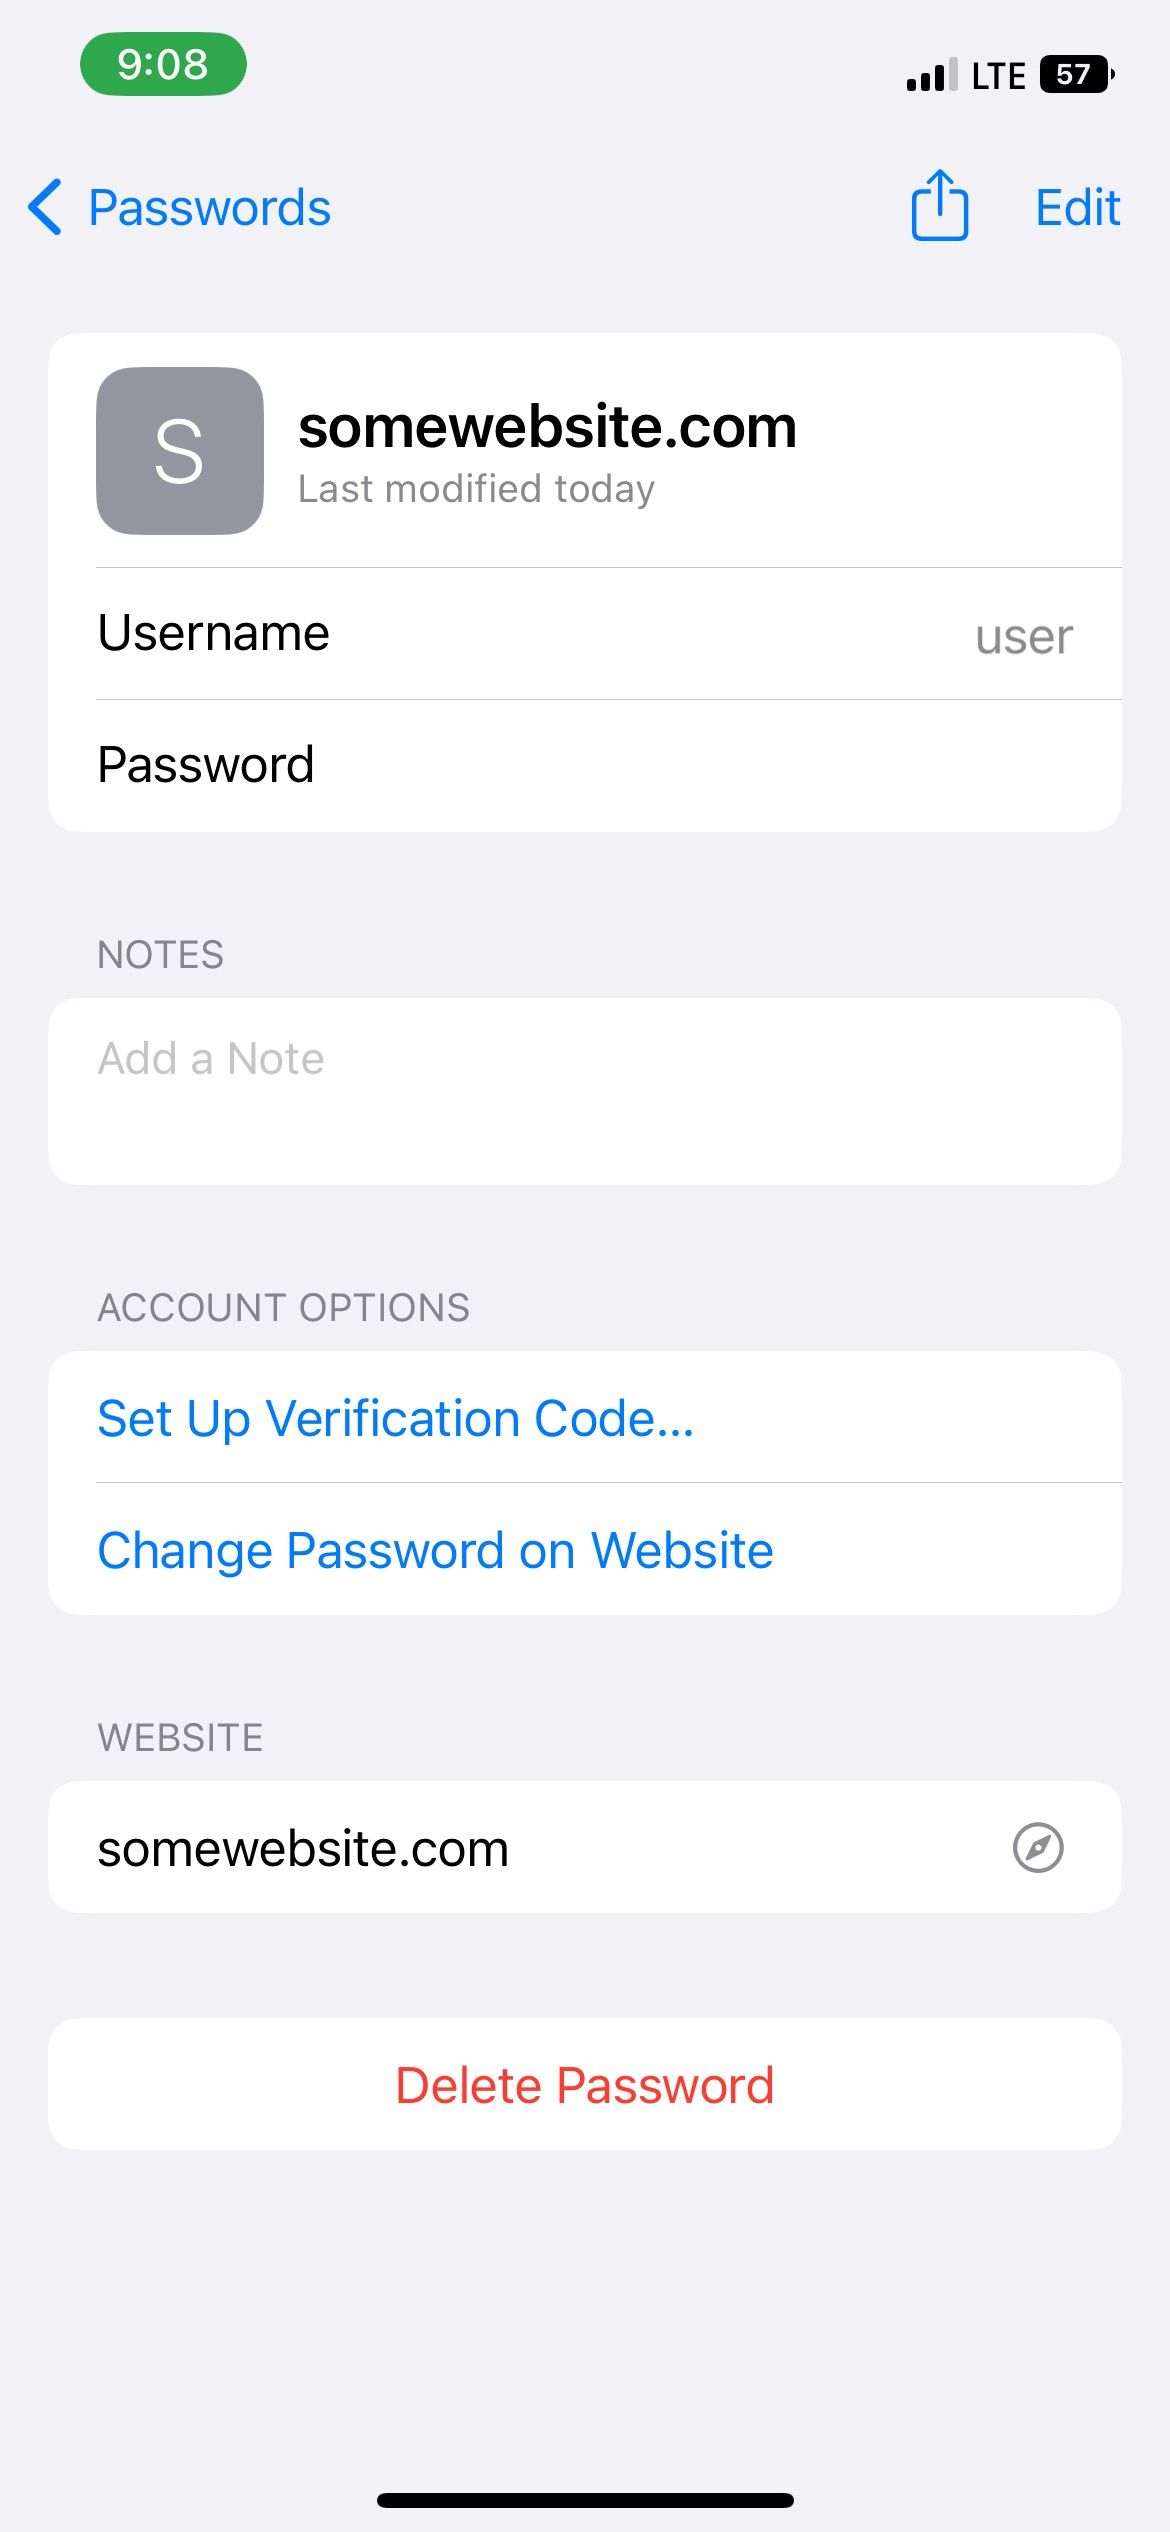 Website and password info in iCloud Keychain